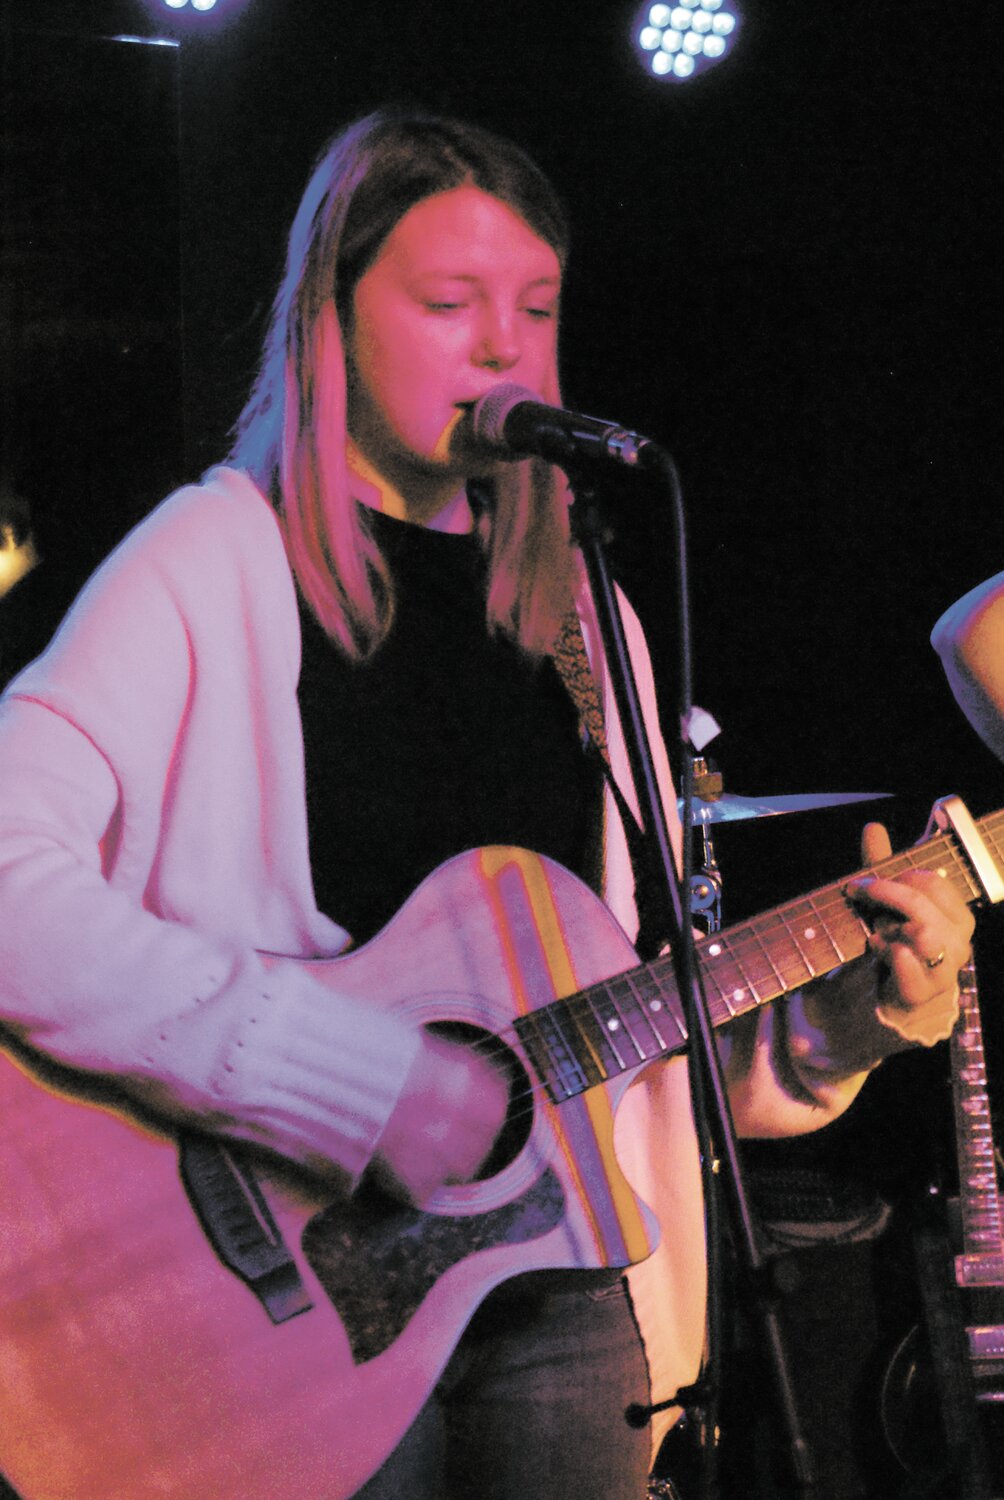 BERKLEE BOUND: Jane Kristiansen (18) a singer-songwriter from J&W School for the Arts got up to the mic. She will attend Berklee college of music in Boston next year. (Photos by Steve Popiel)